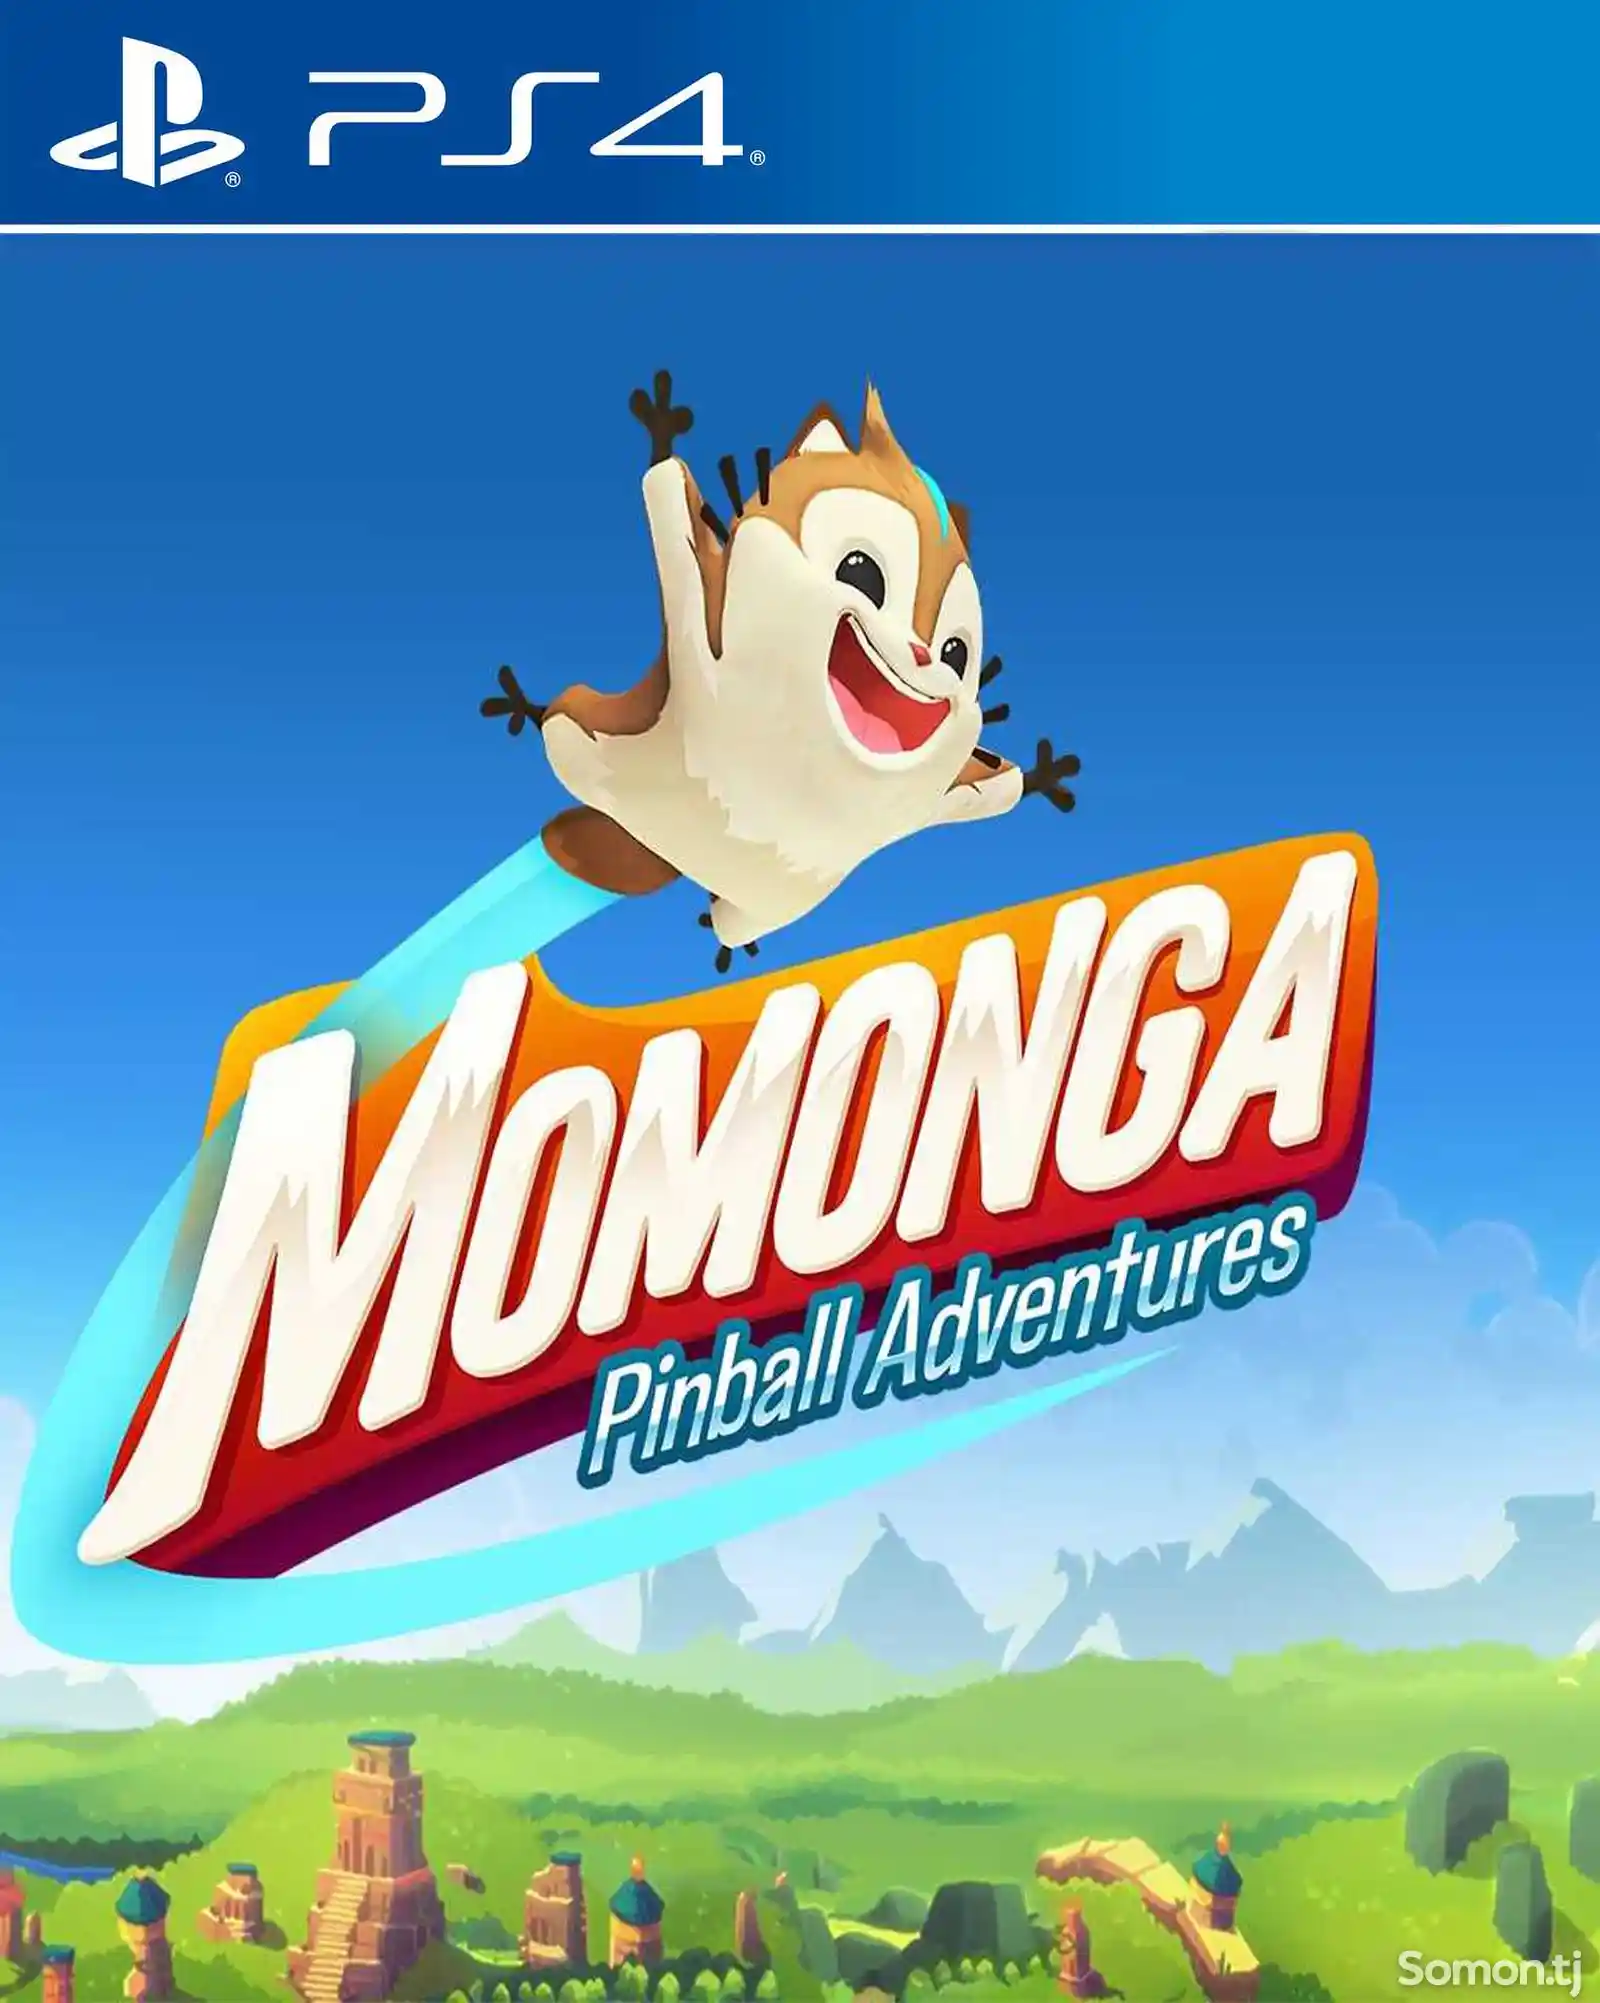 Игра Momonga pinball для PS-4 / 5.05 / 6.72 / 7.02 / 7.55 / 9.00 /-1